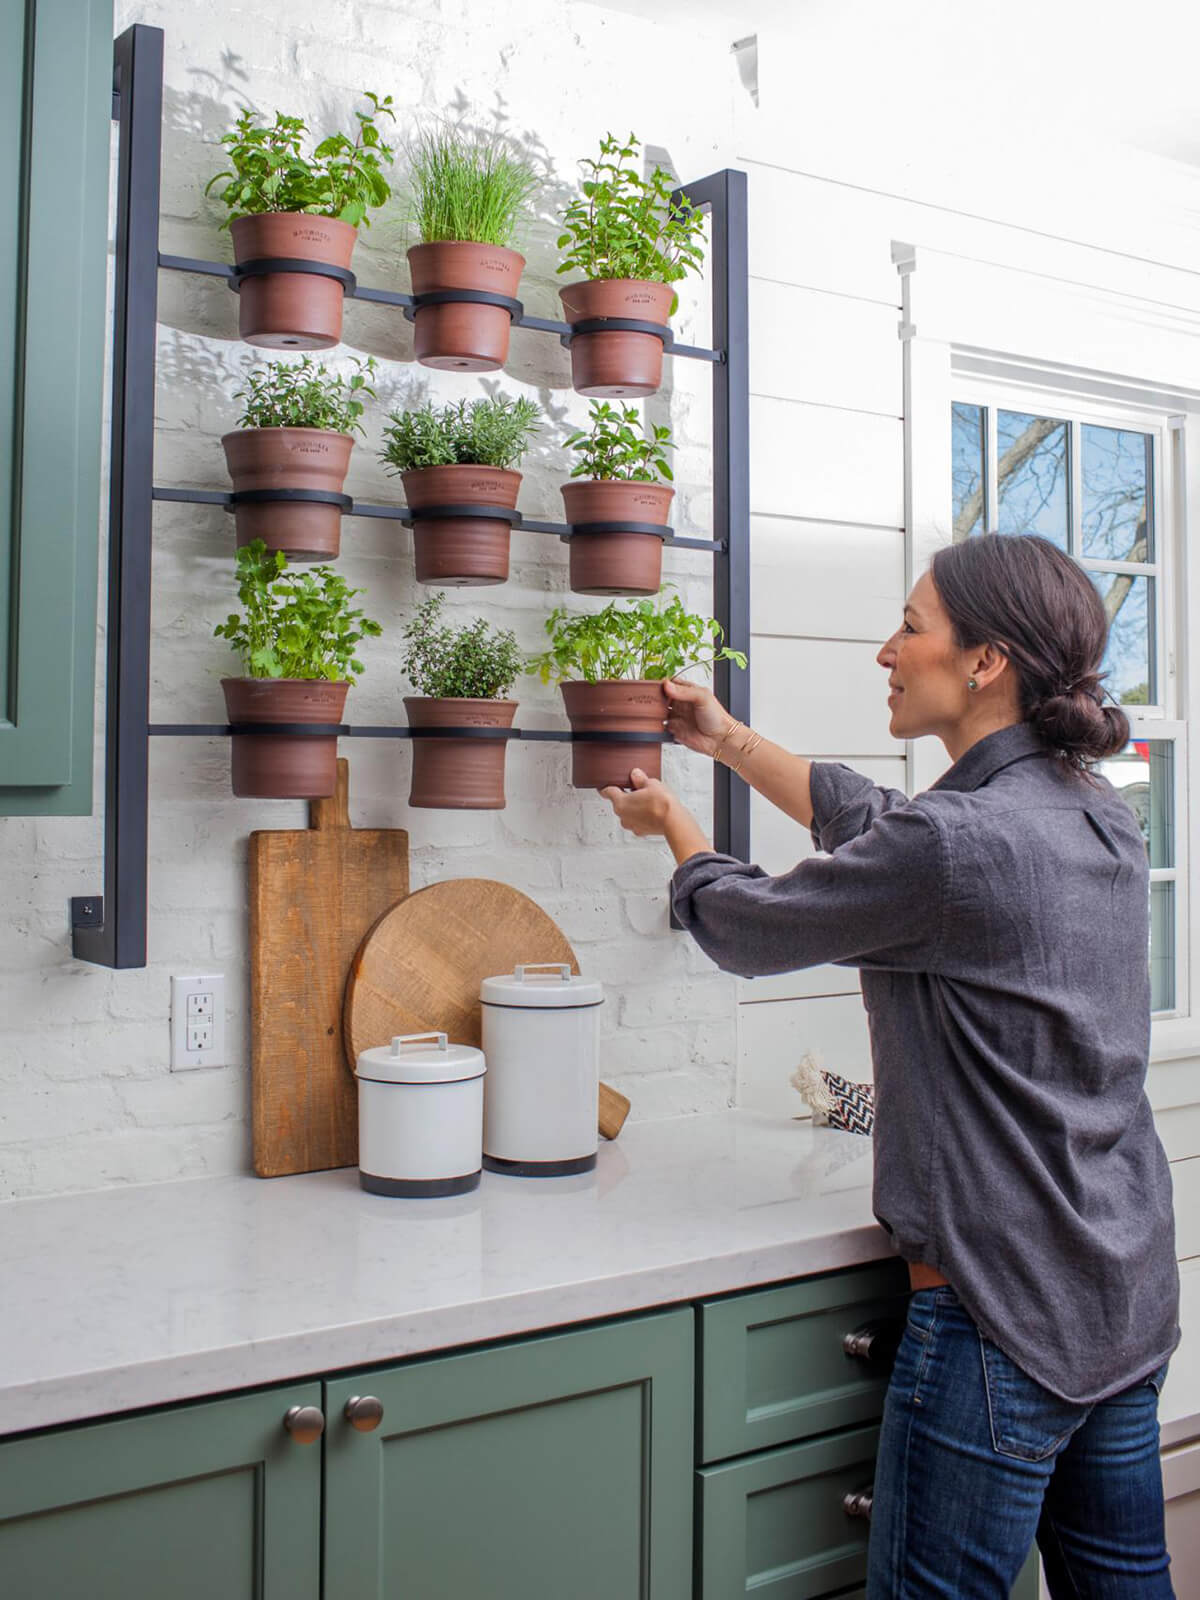 Home Decor Live Plant Organic Kitchen Garden LiTTdesign Tier Tray Counter Herb Garden